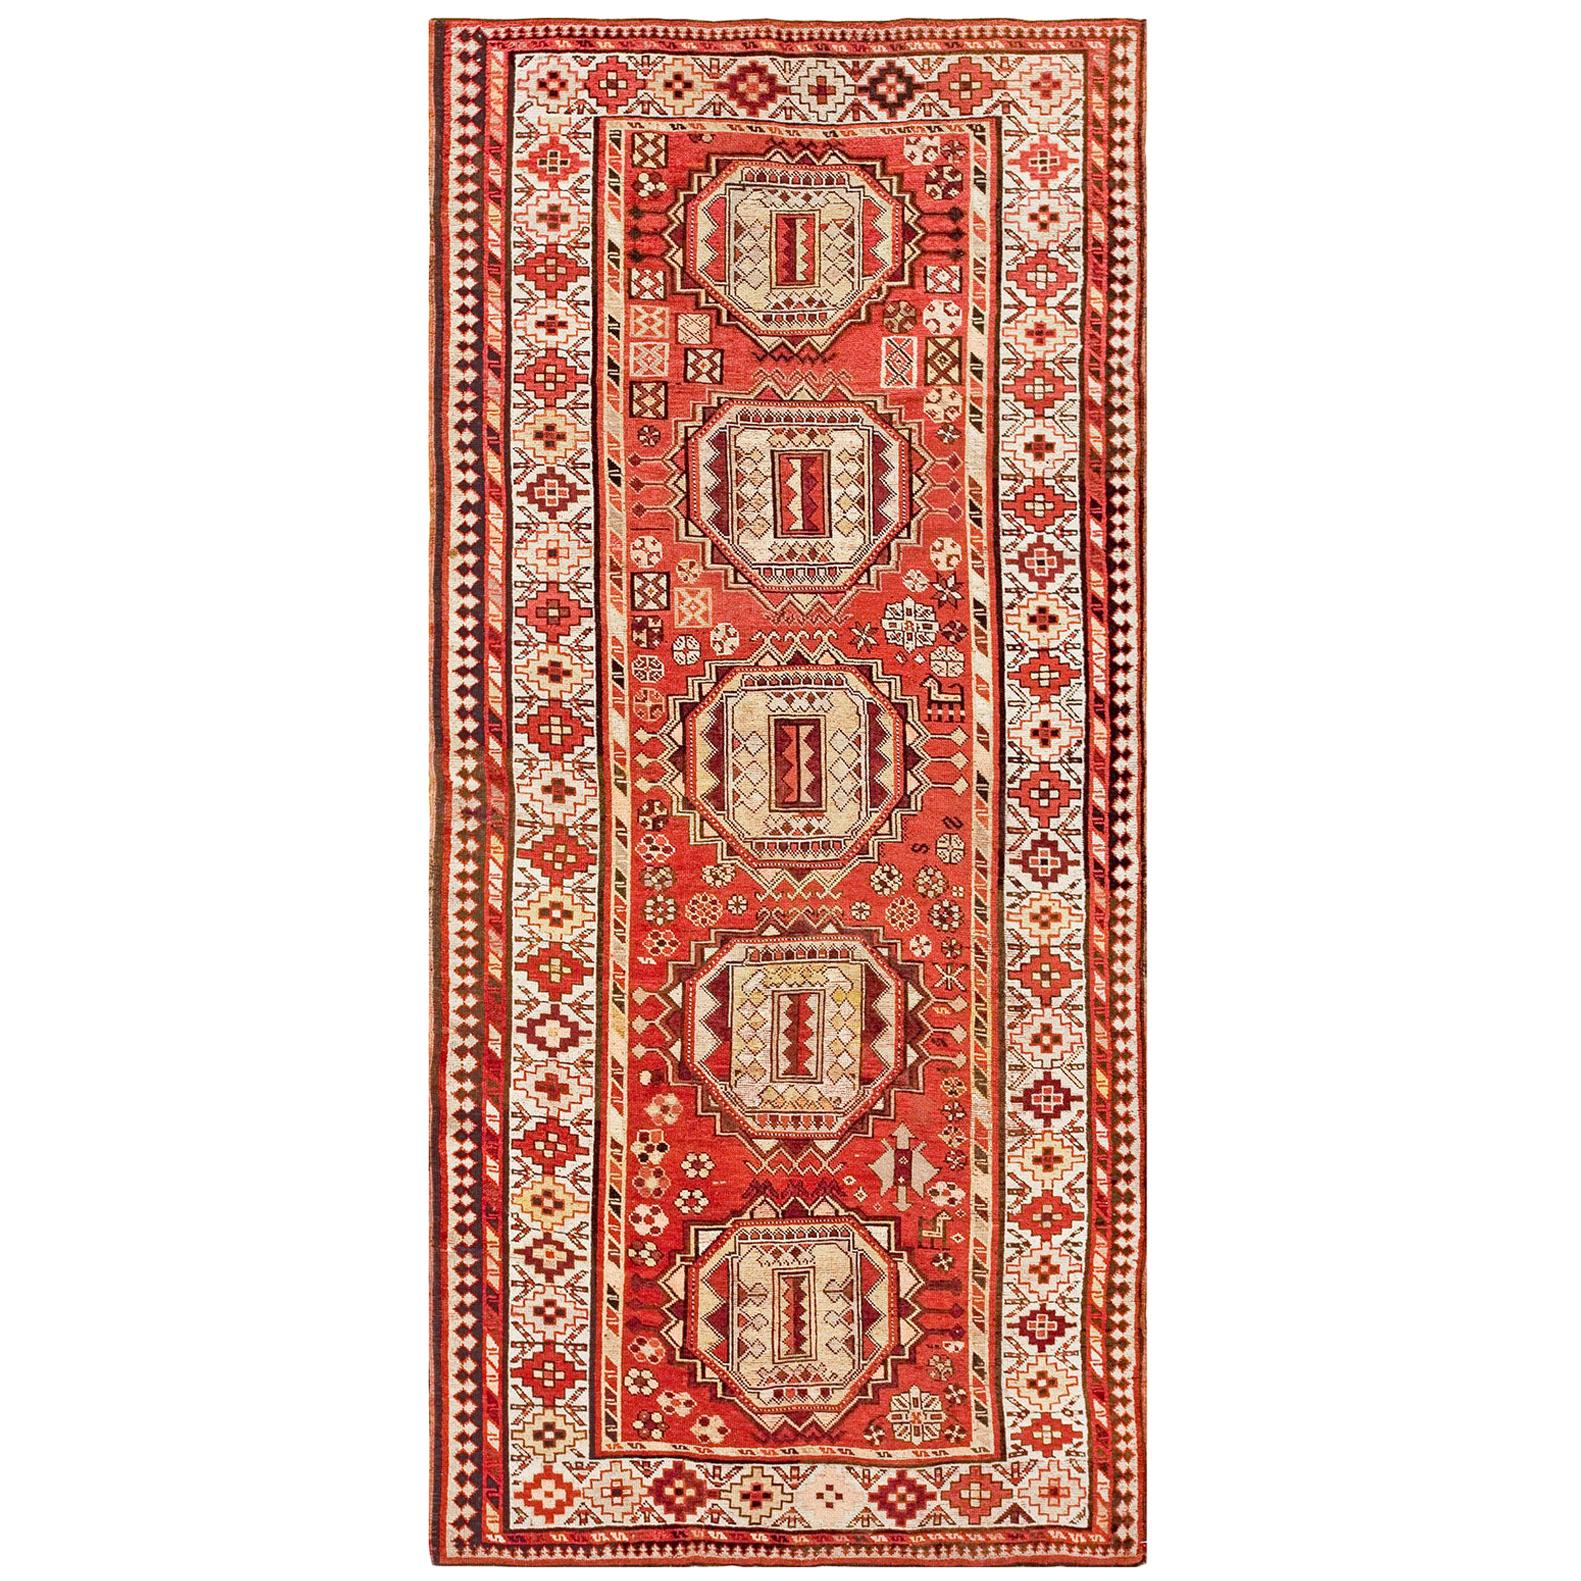 Early 20th Century Caucasian Karabagh Carpet ( 4' x 9' - 122 x 274 )